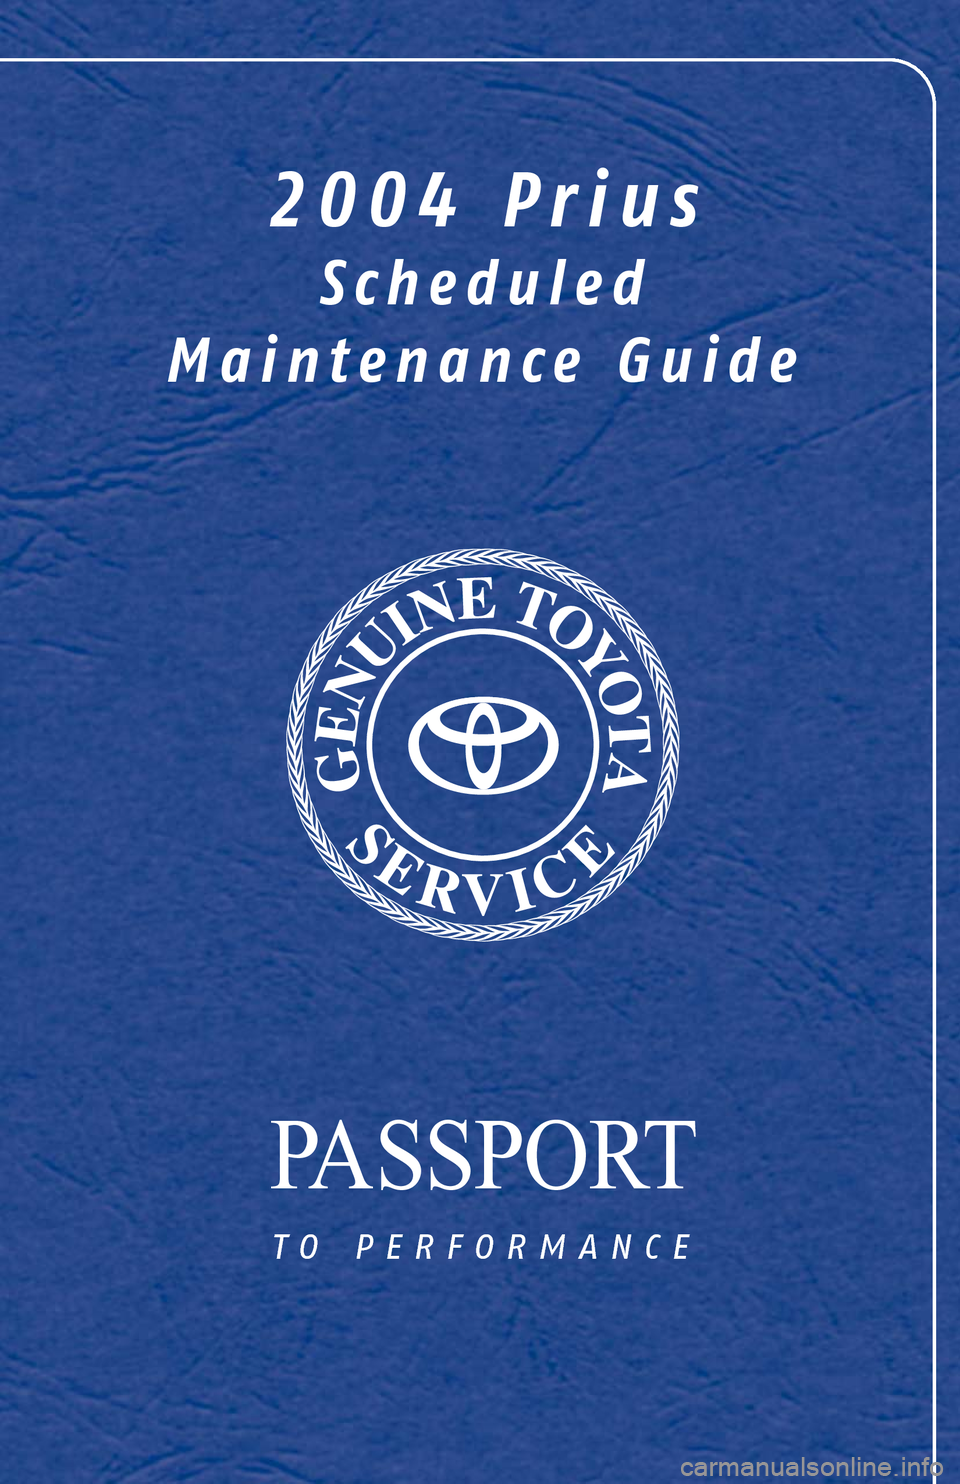 TOYOTA PRIUS 2004 2.G Scheduled Maintenance Guide PASSPORT
to performance
2004 Prius
Scheduled 
Maintenance Guide 